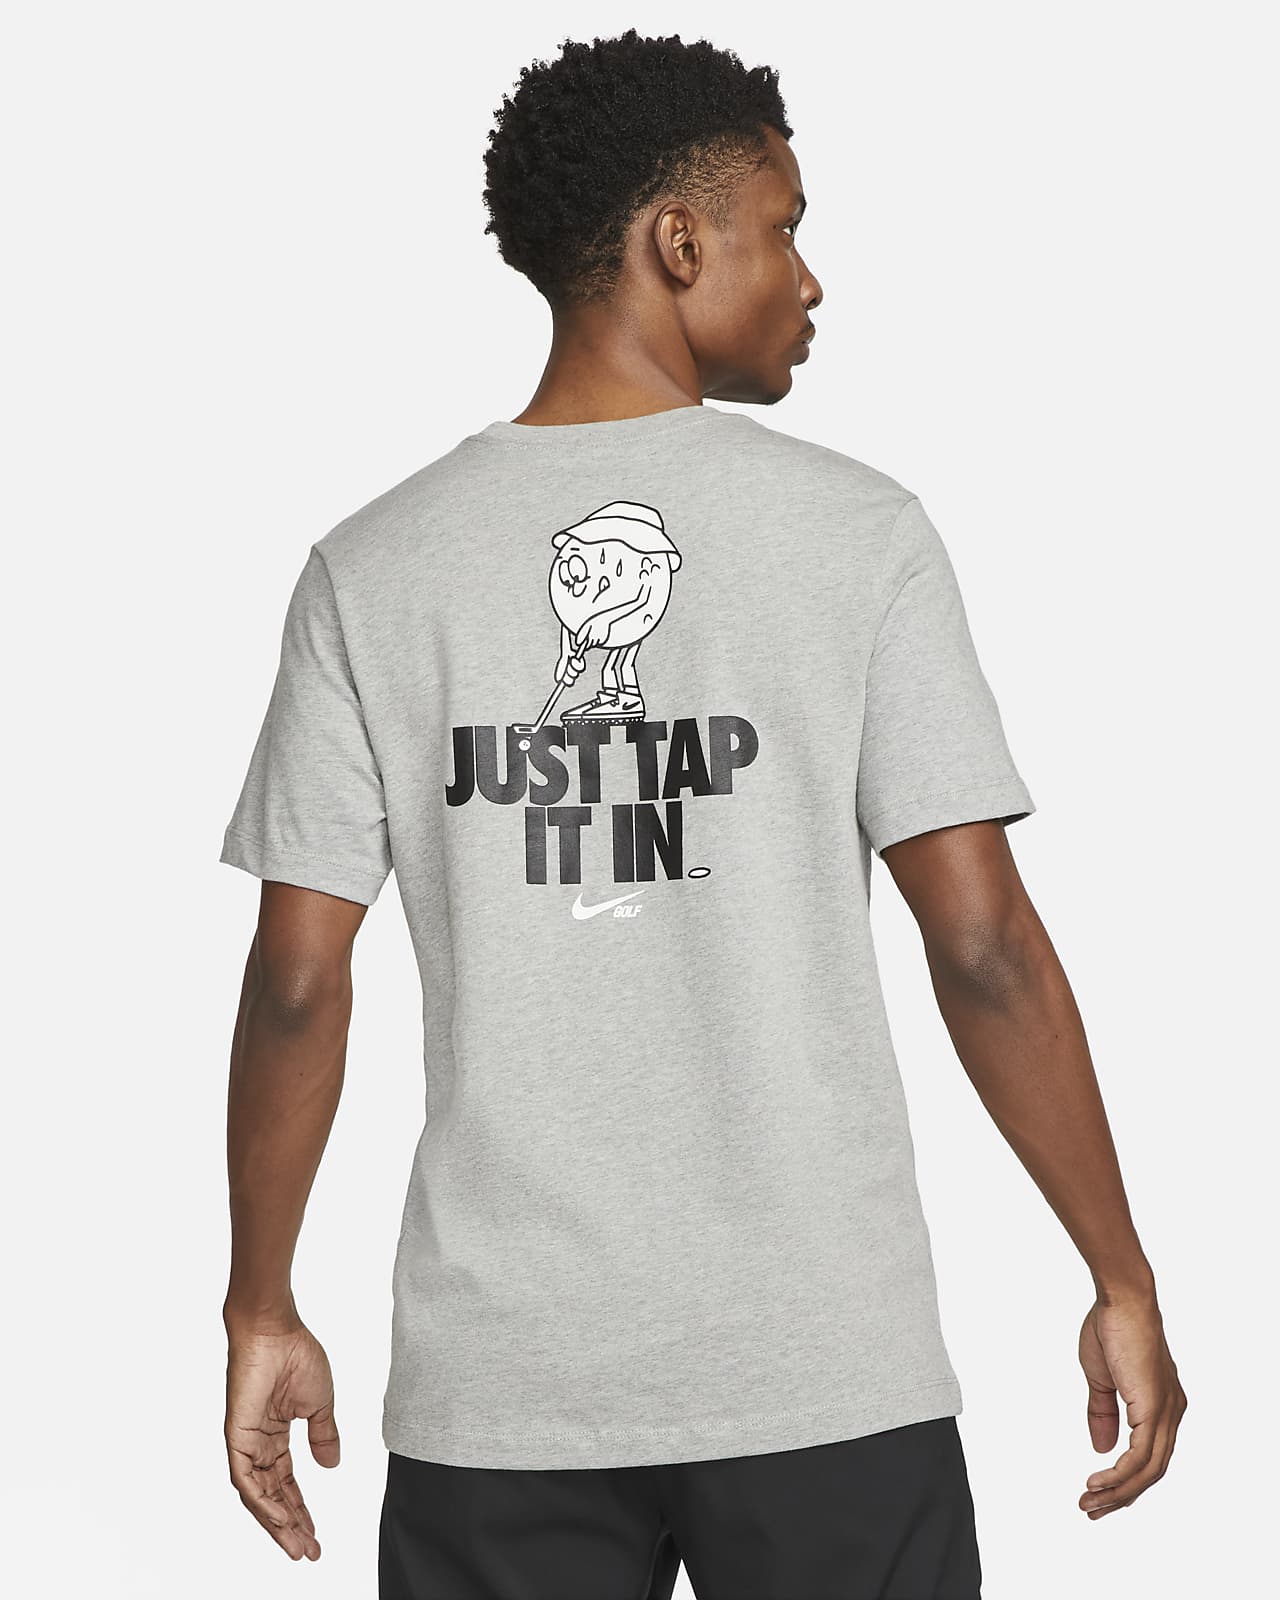 Nike Men's Golf T-Shirt.